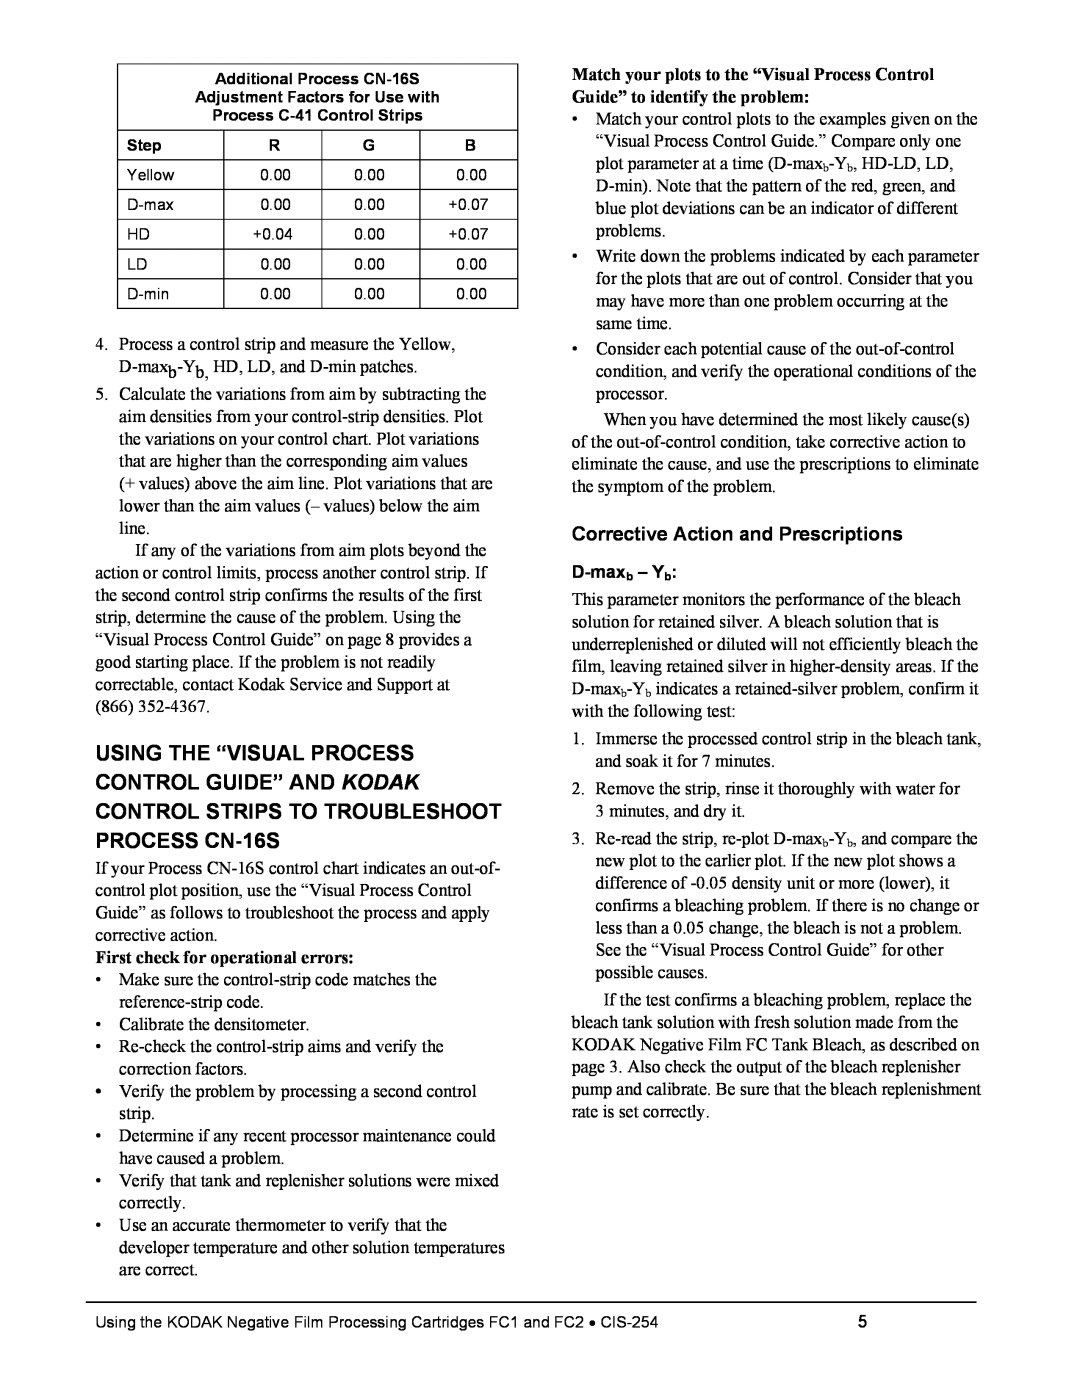 Kodak FC2, FC1 manual Corrective Action and Prescriptions, D-maxb – Yb, First check for operational errors 